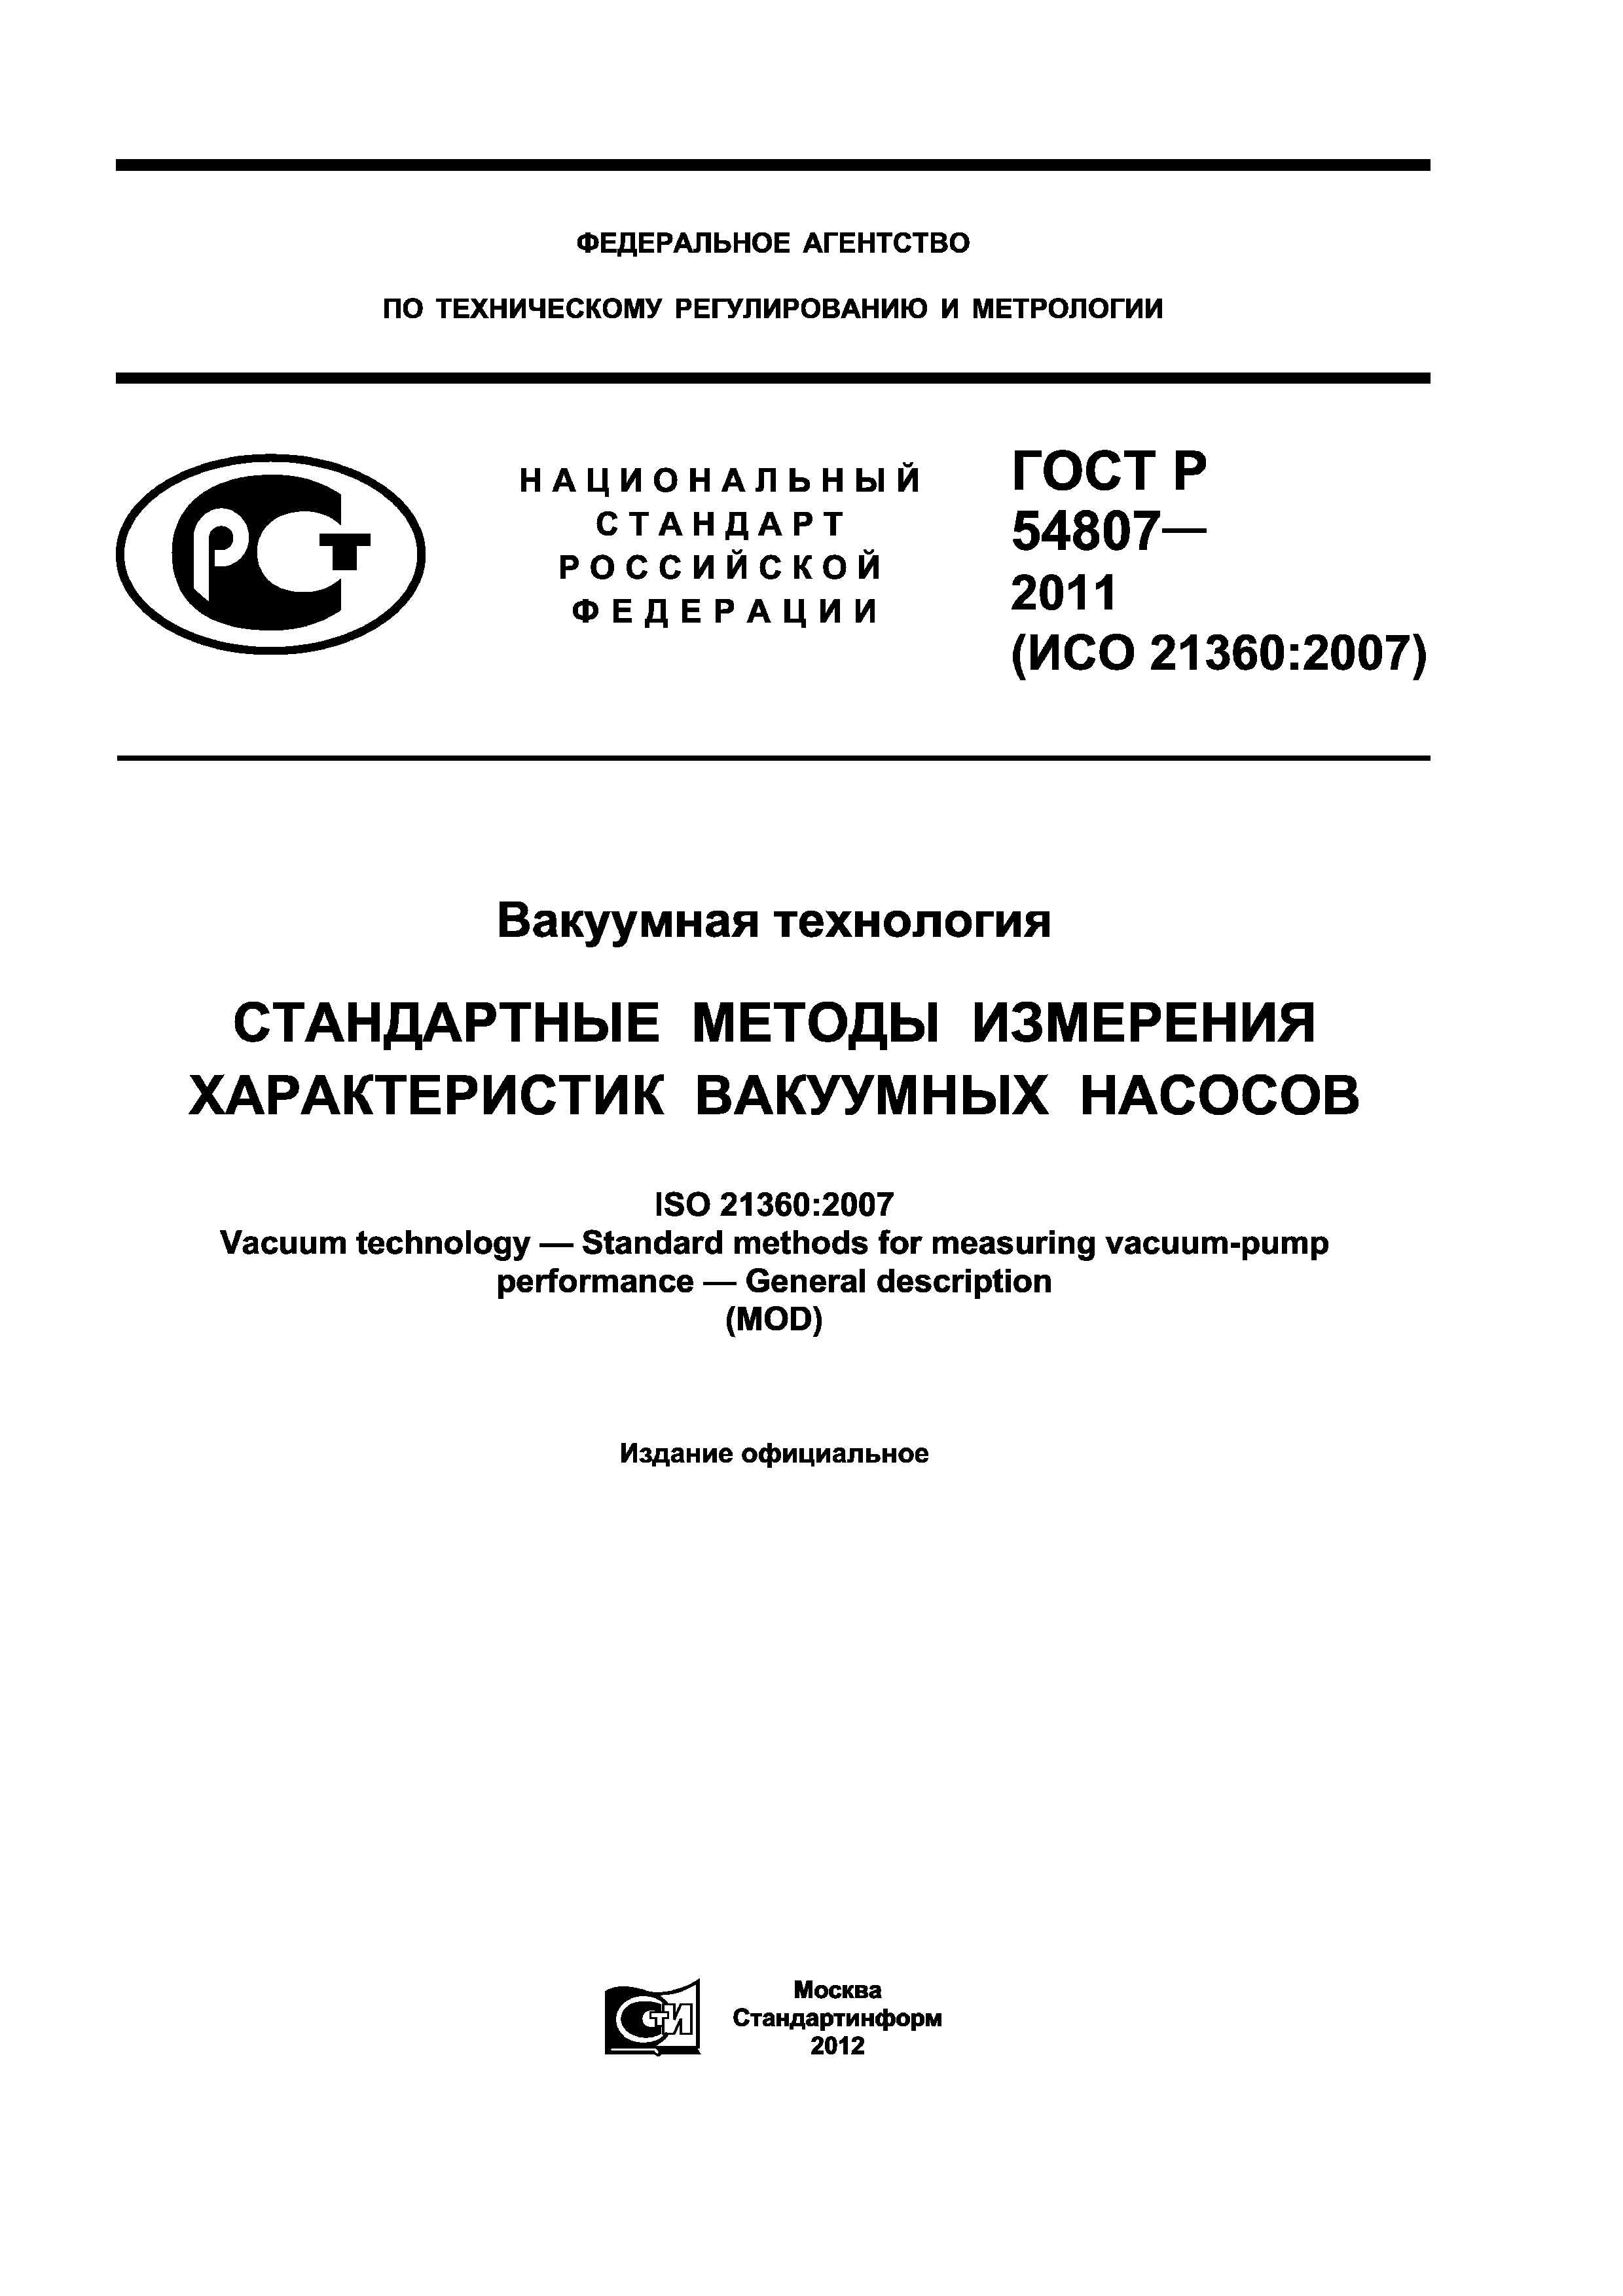 ГОСТ Р 54807-2011